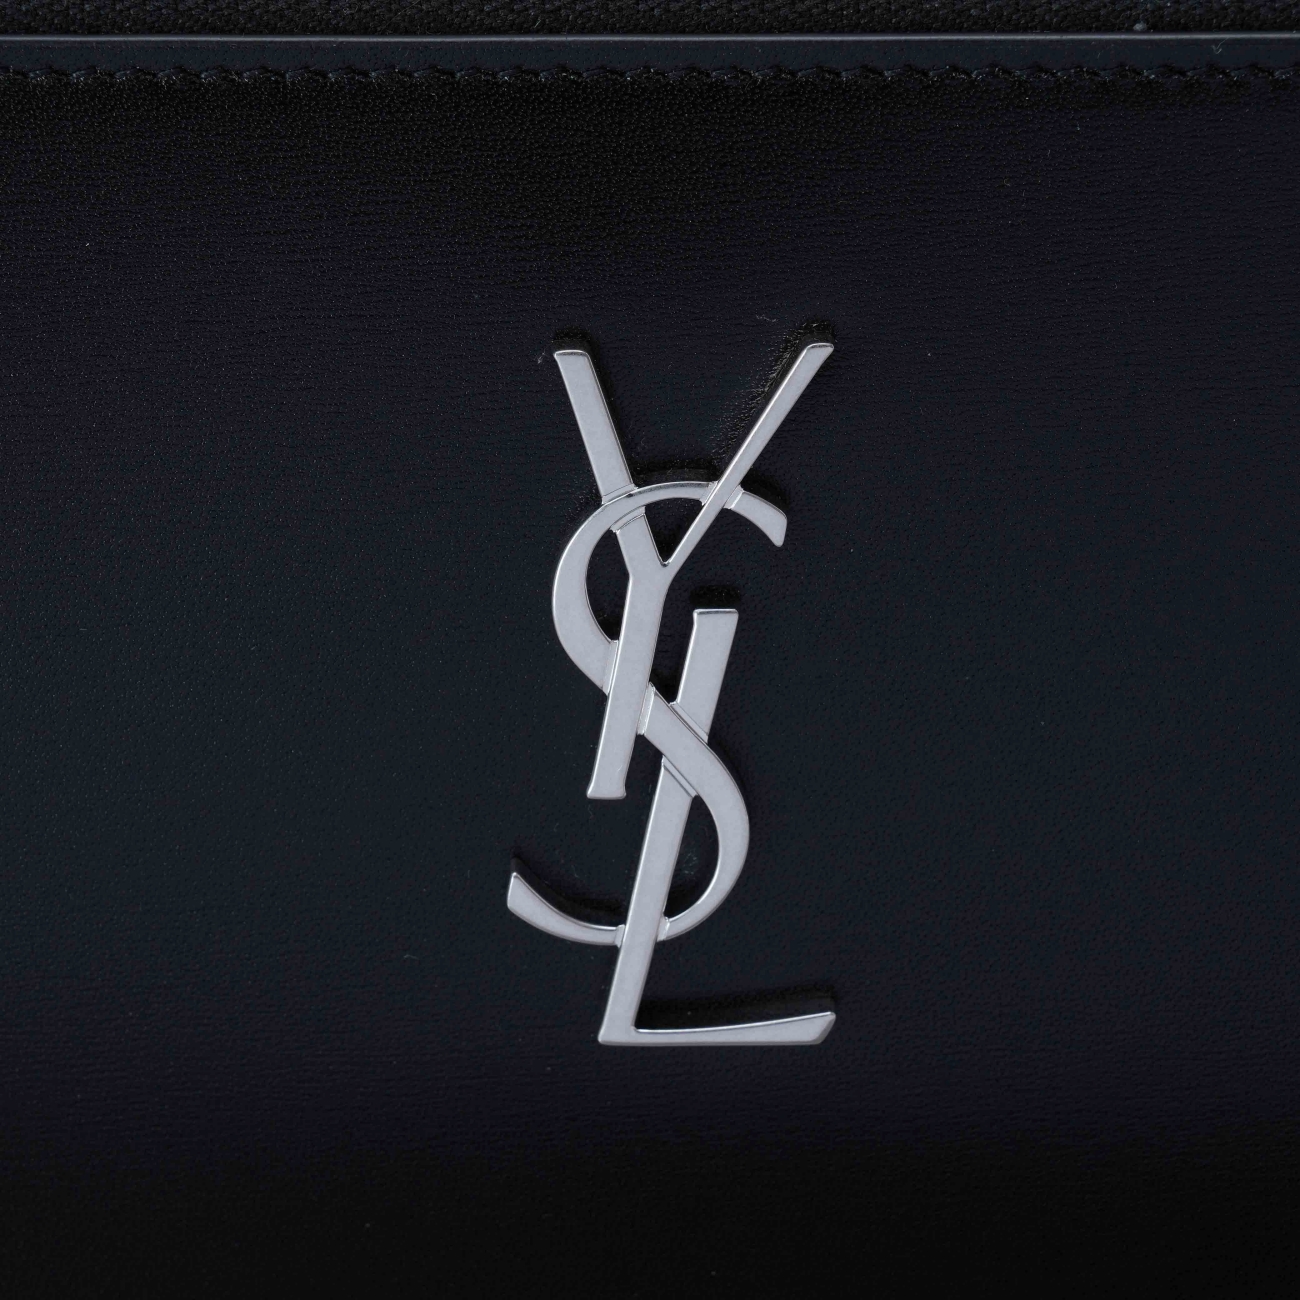 Yves Saint Laurent(USED)생로랑 453249 모노그램 클러치